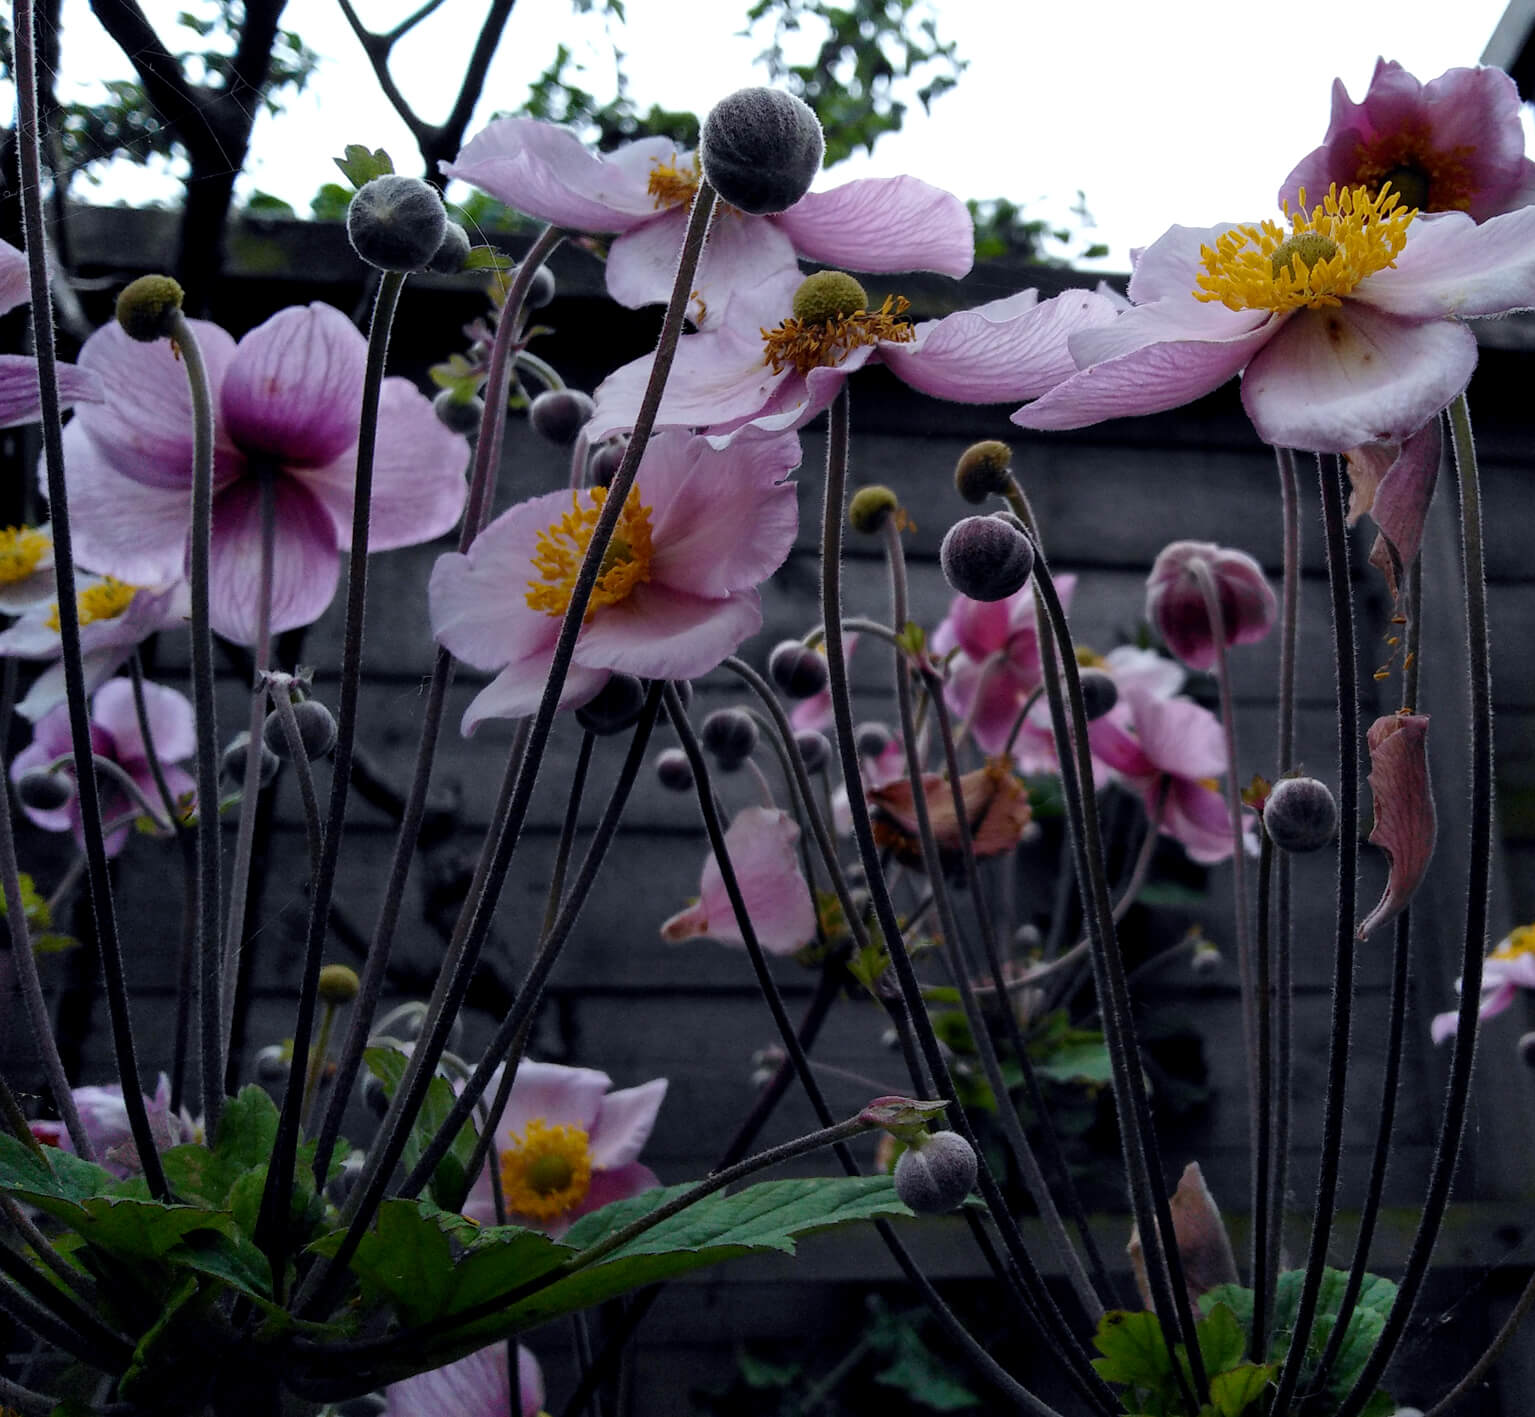 Japanese anemone garden photo Gea Zwart inspiration enpleinair painting the blue hour